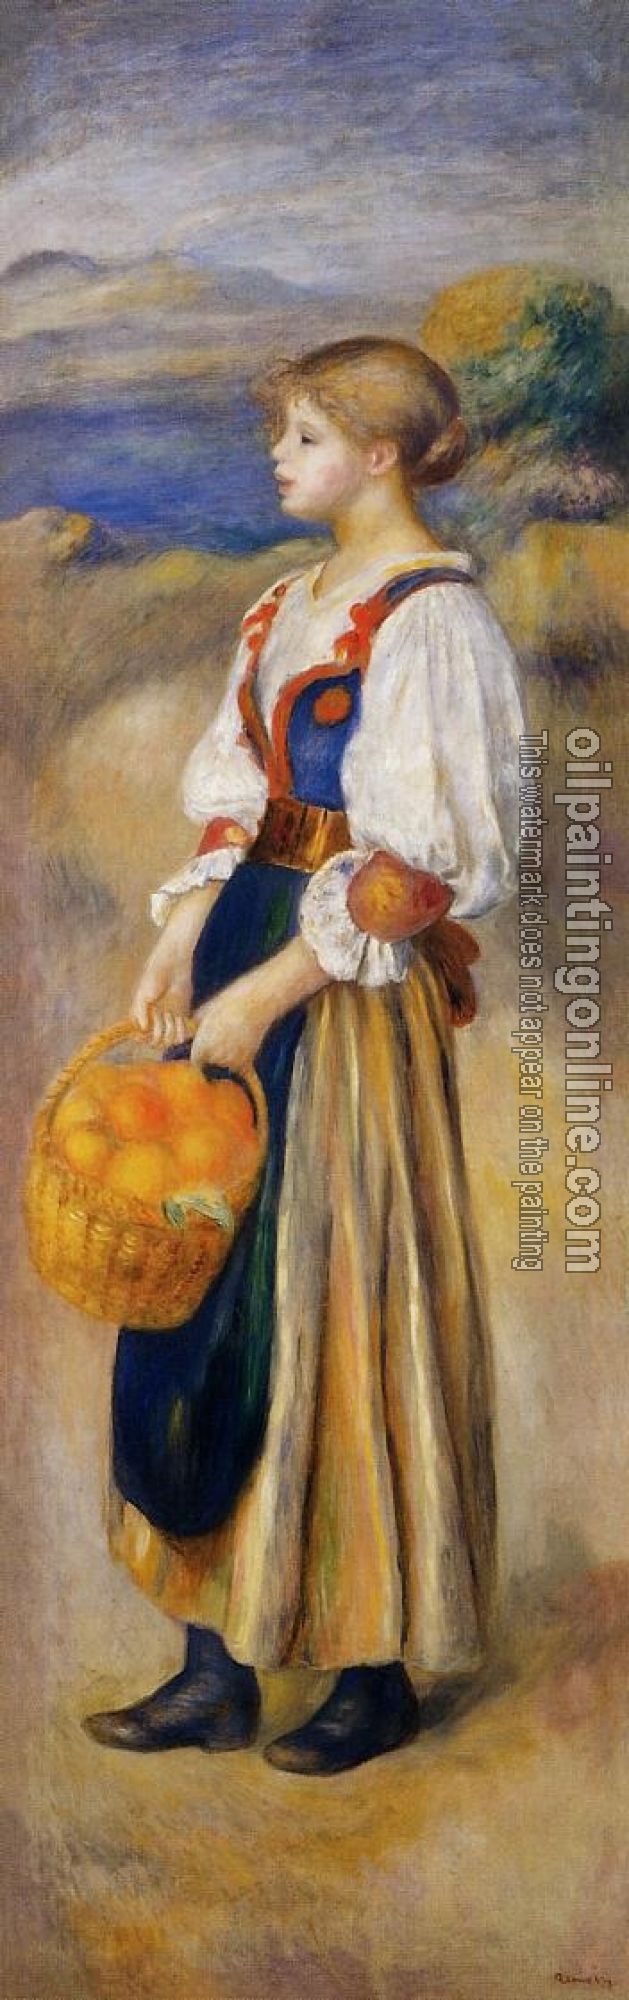 Renoir, Pierre Auguste - Girl with a Basket of Oranges